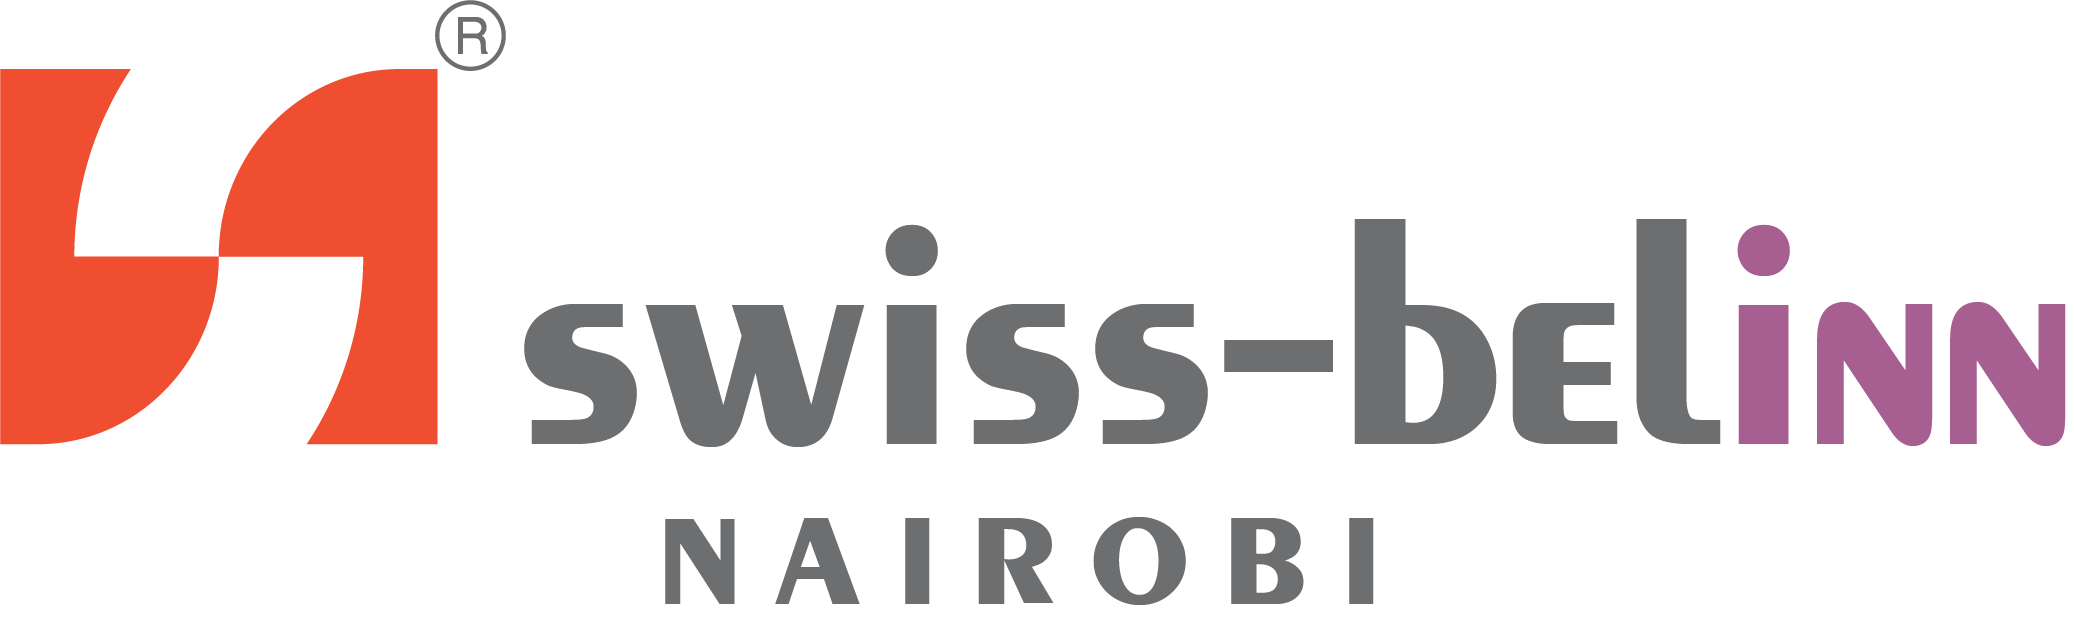 Swiss-Belinn Nairobi